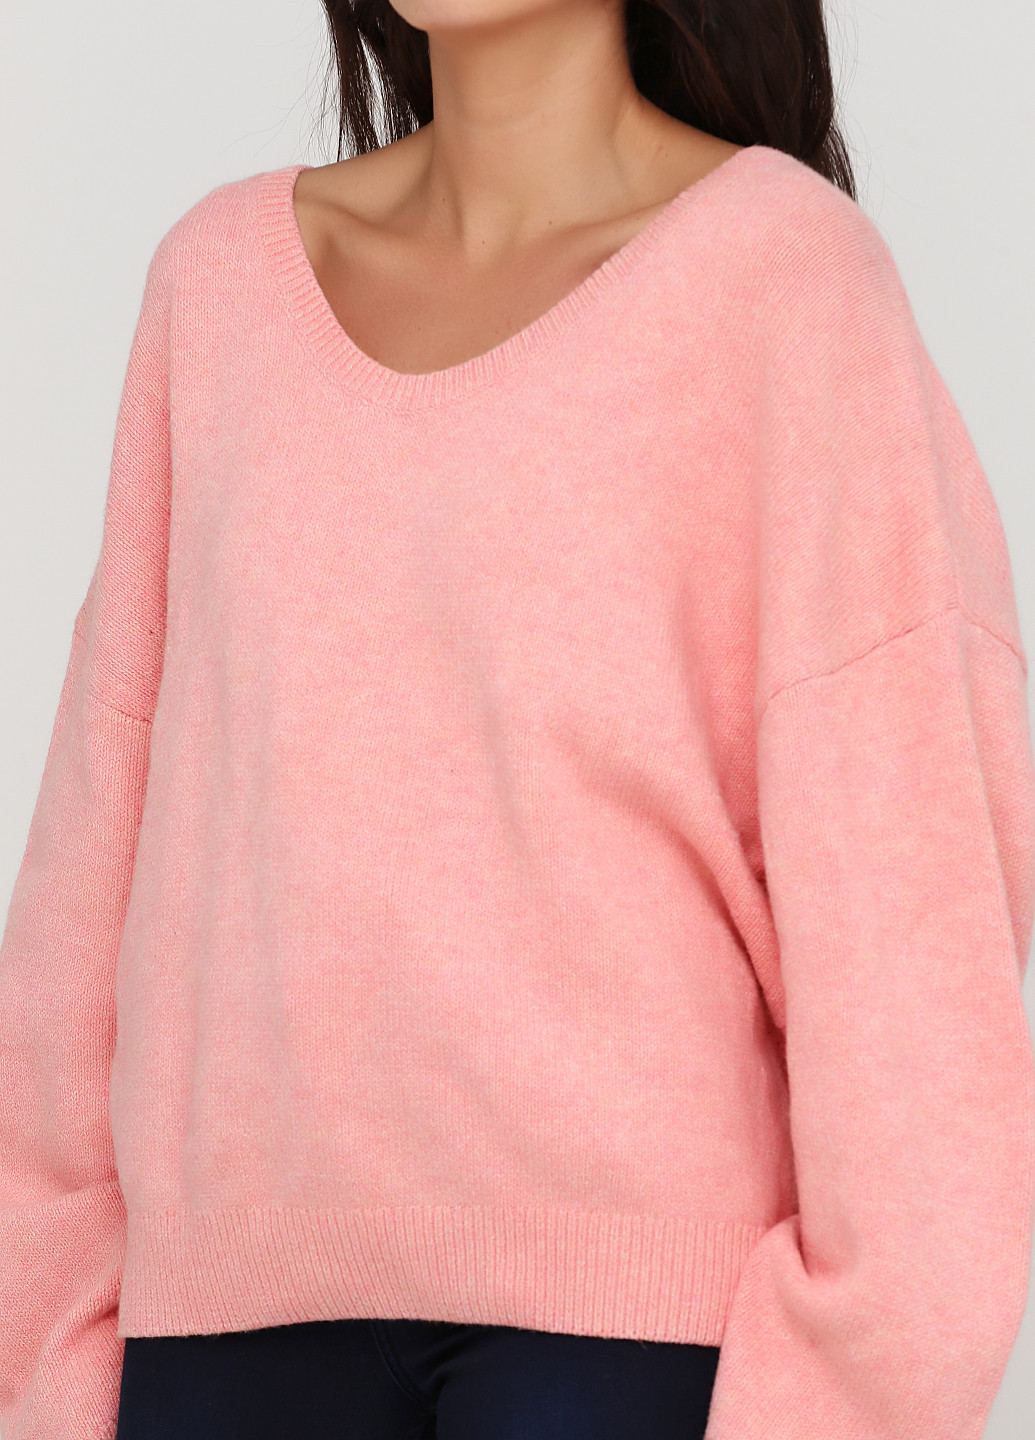 Розовый демисезонный пуловер пуловер MTWTFSS Weekday